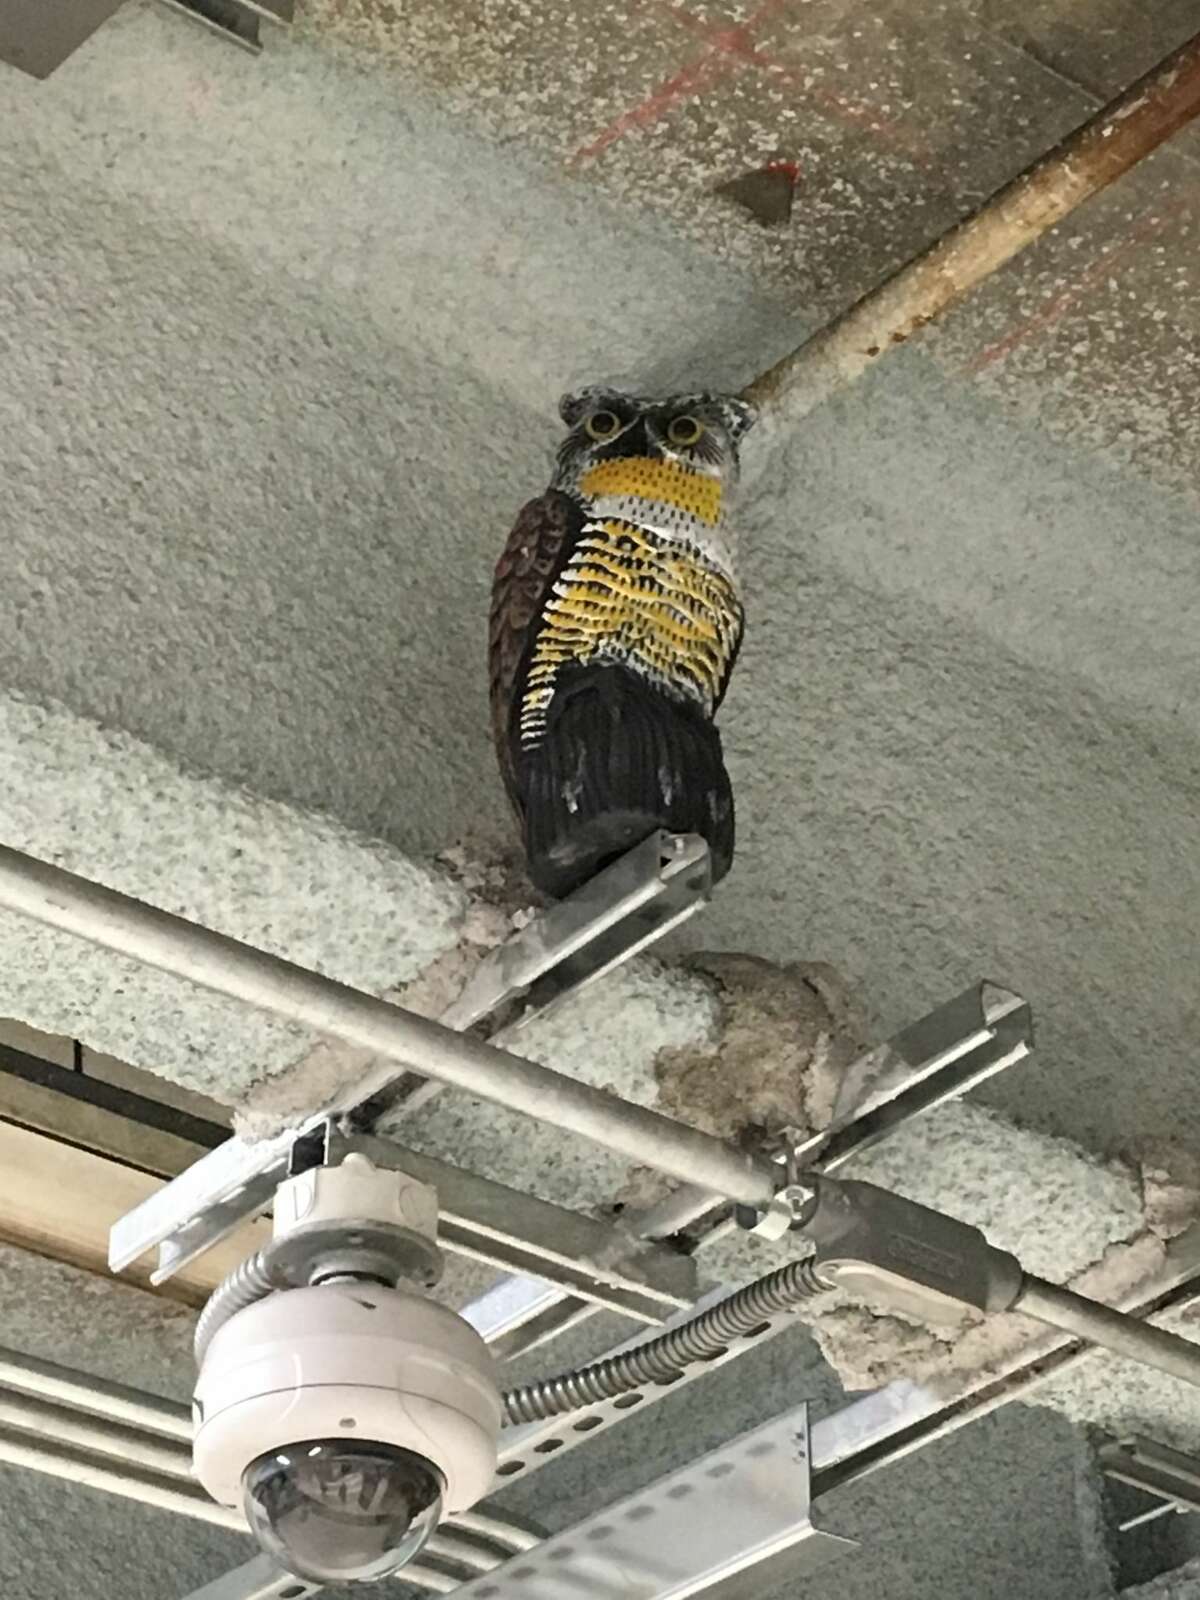 Owl decoys keep watch over the Powell Street BART station on February 12, 2018.